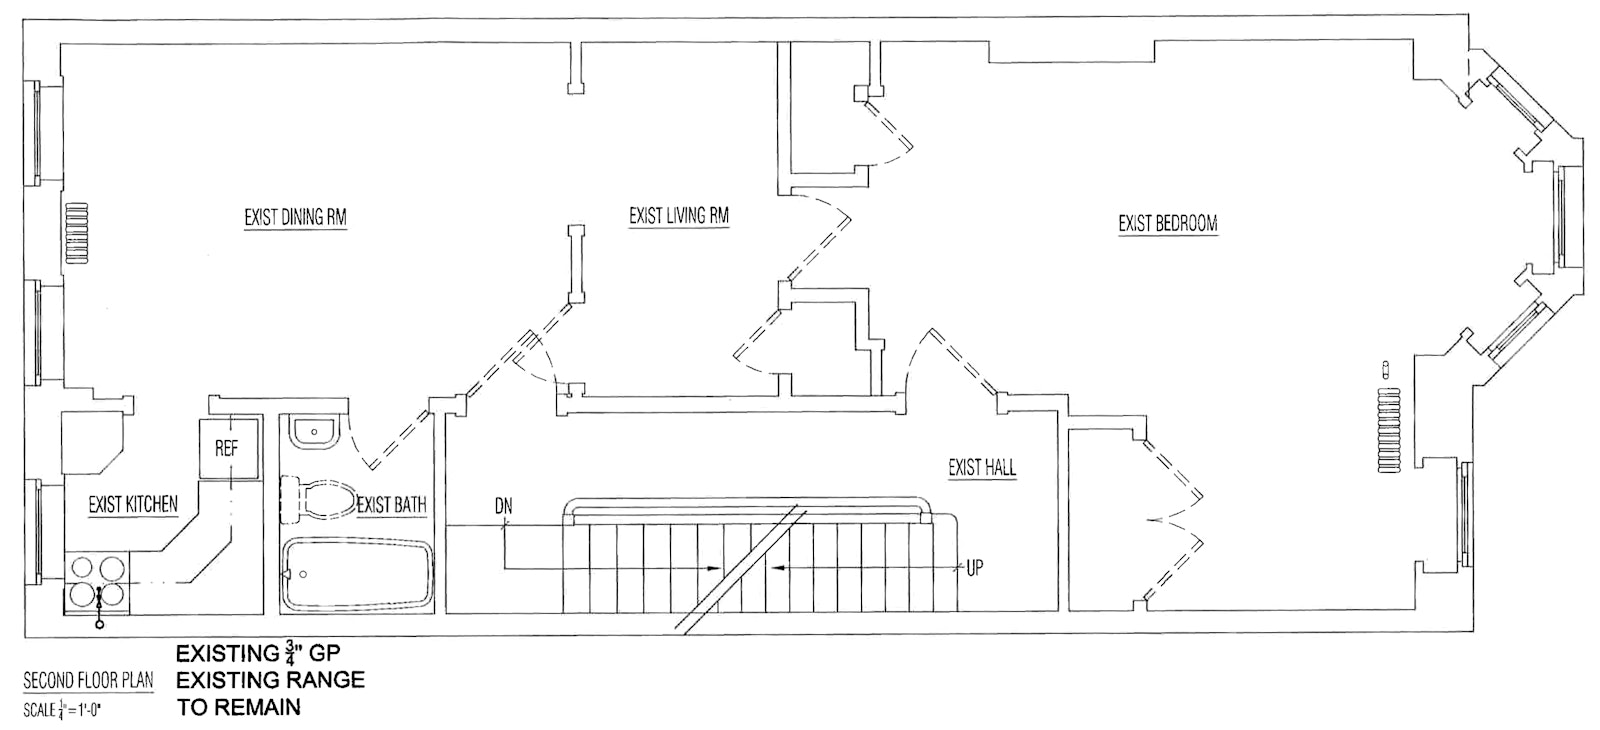 Floorplan for 248 Sixth Avenue, 2